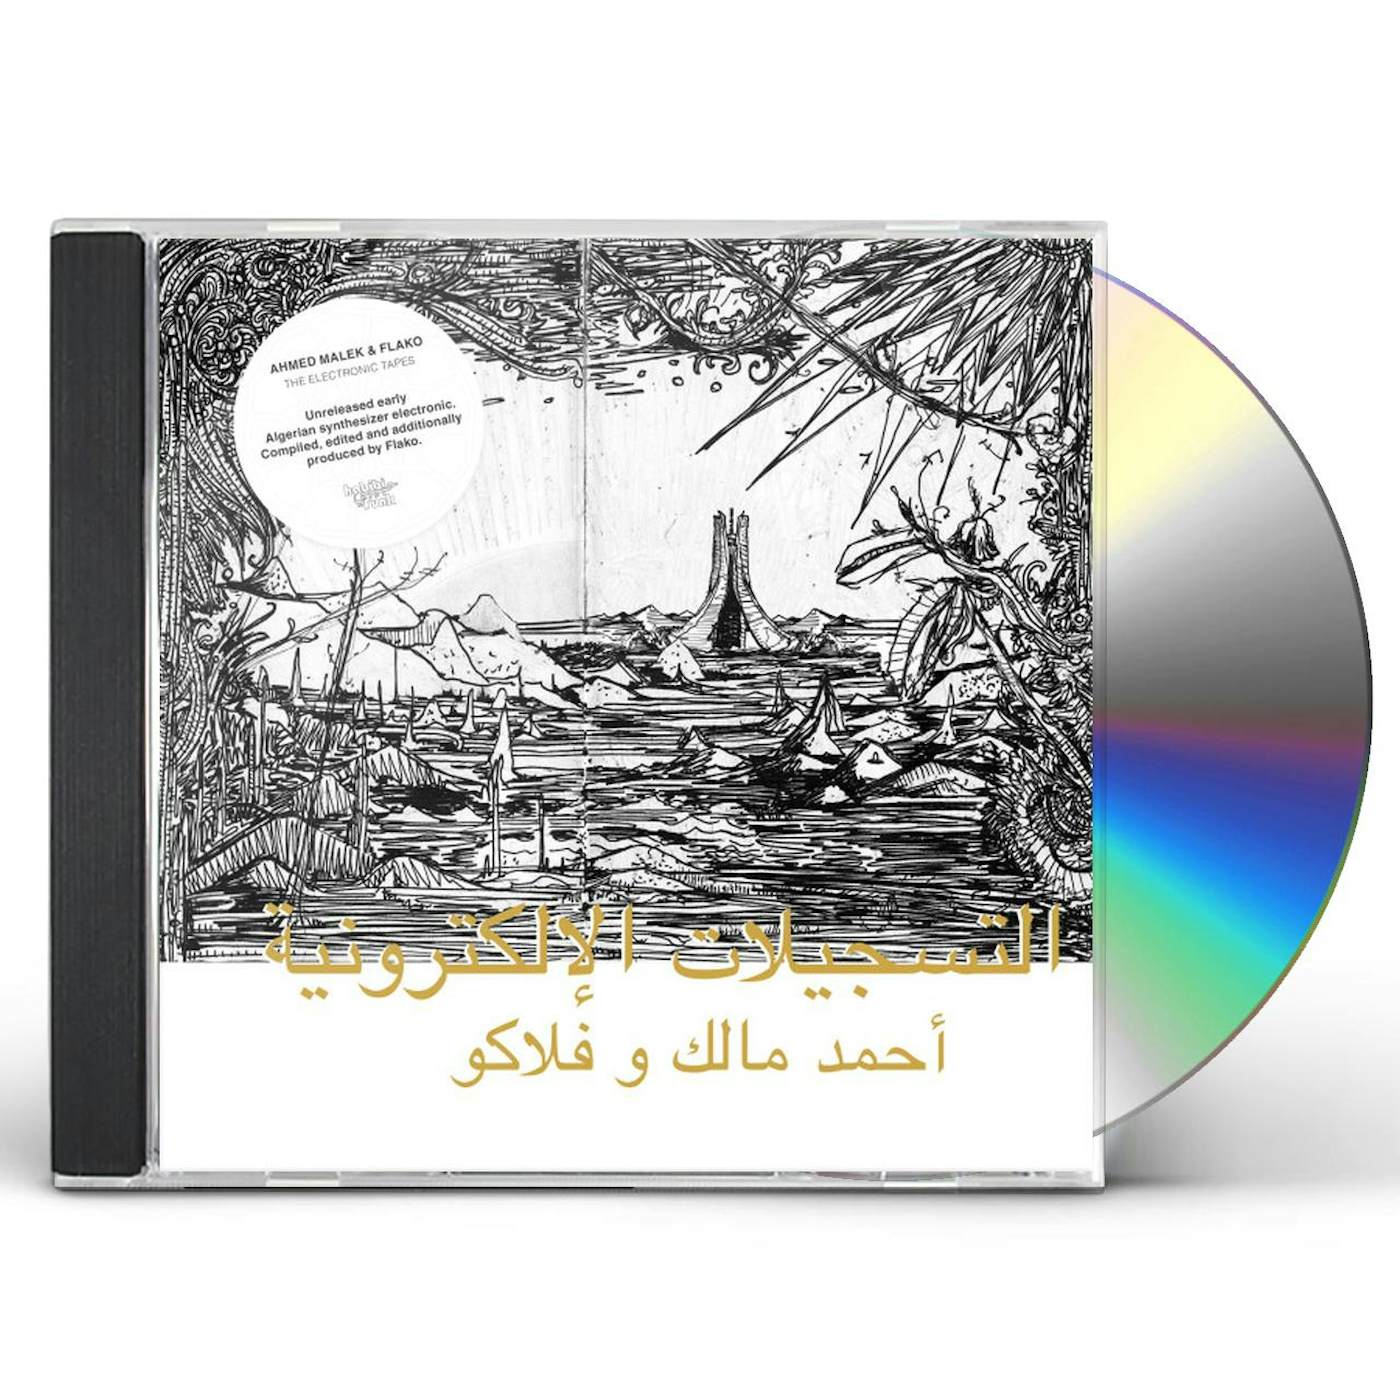 Ahmed Malek & Flako ELECTRONIC TAPES CD